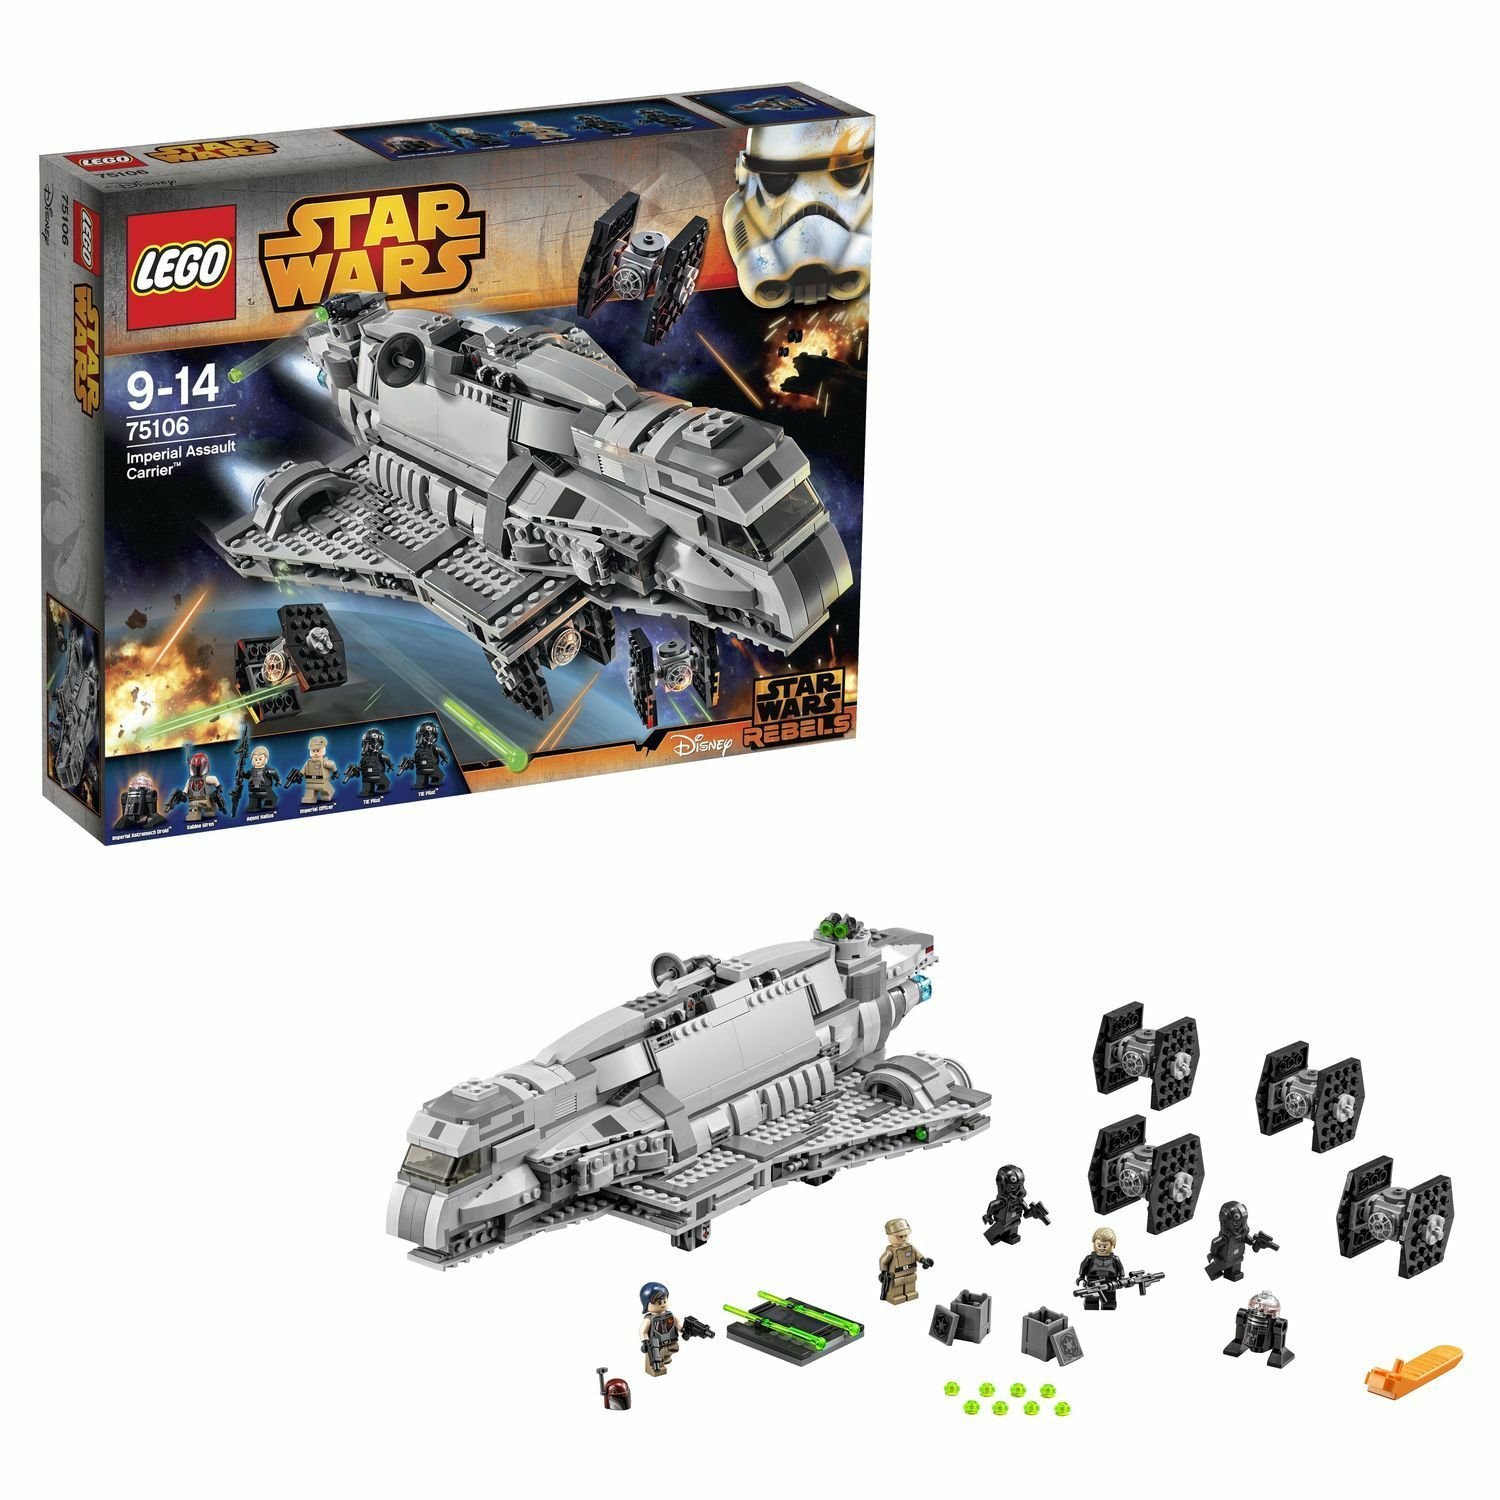 LEGO Star Wars Rebels Imperial Assault Carrier 1216 Piece